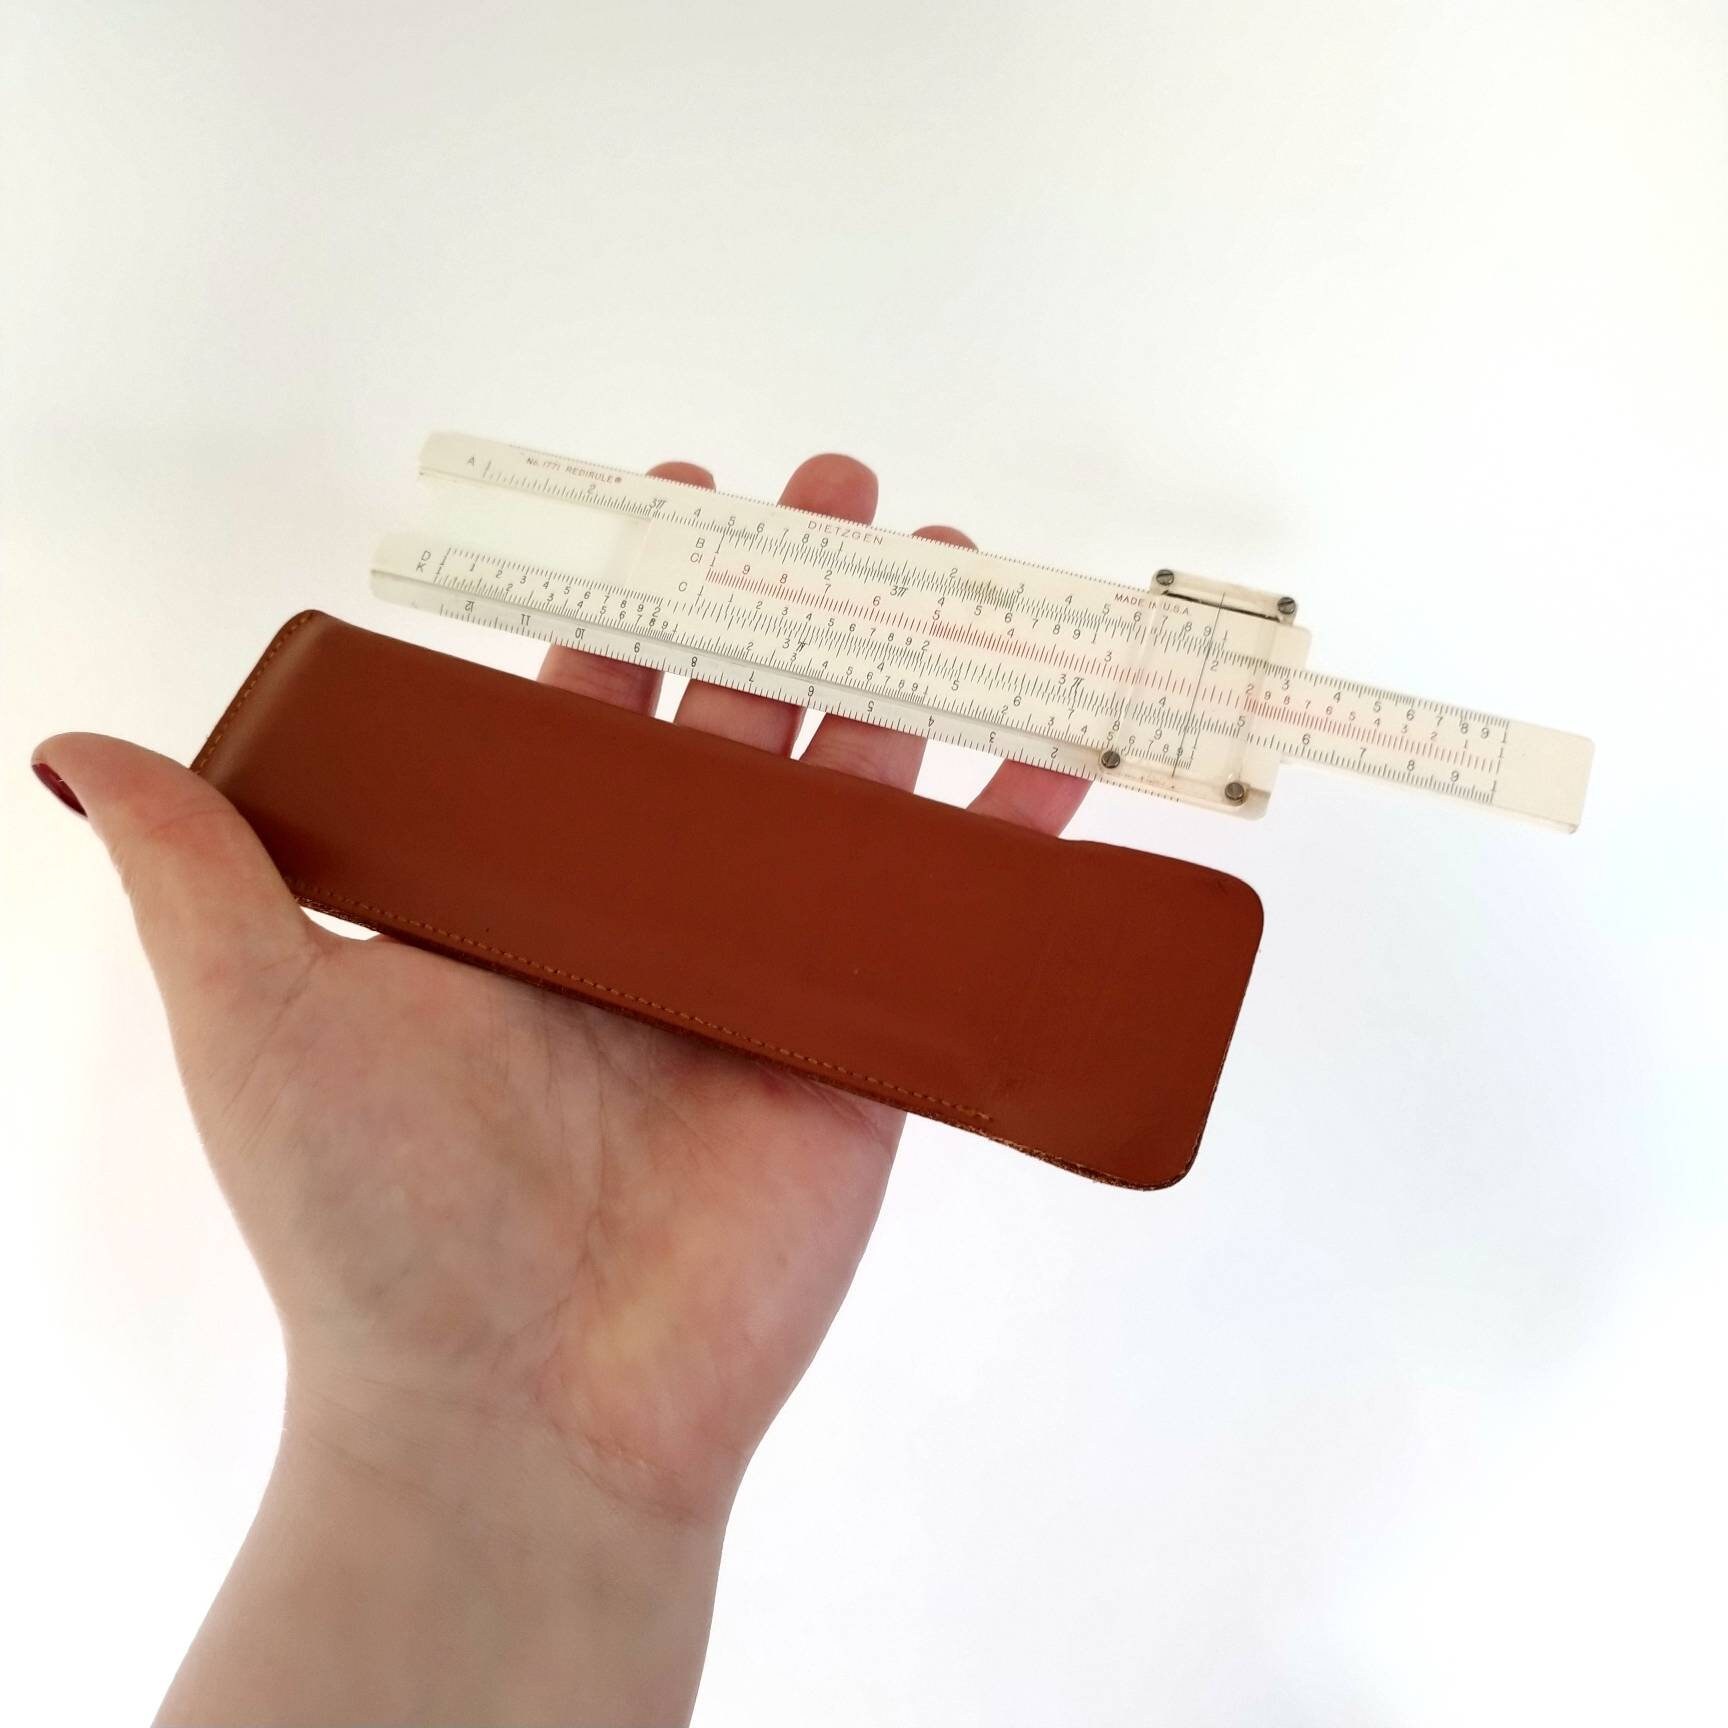 851 Pencil Case Multipurpose Utility Box Ruler Length - Clear